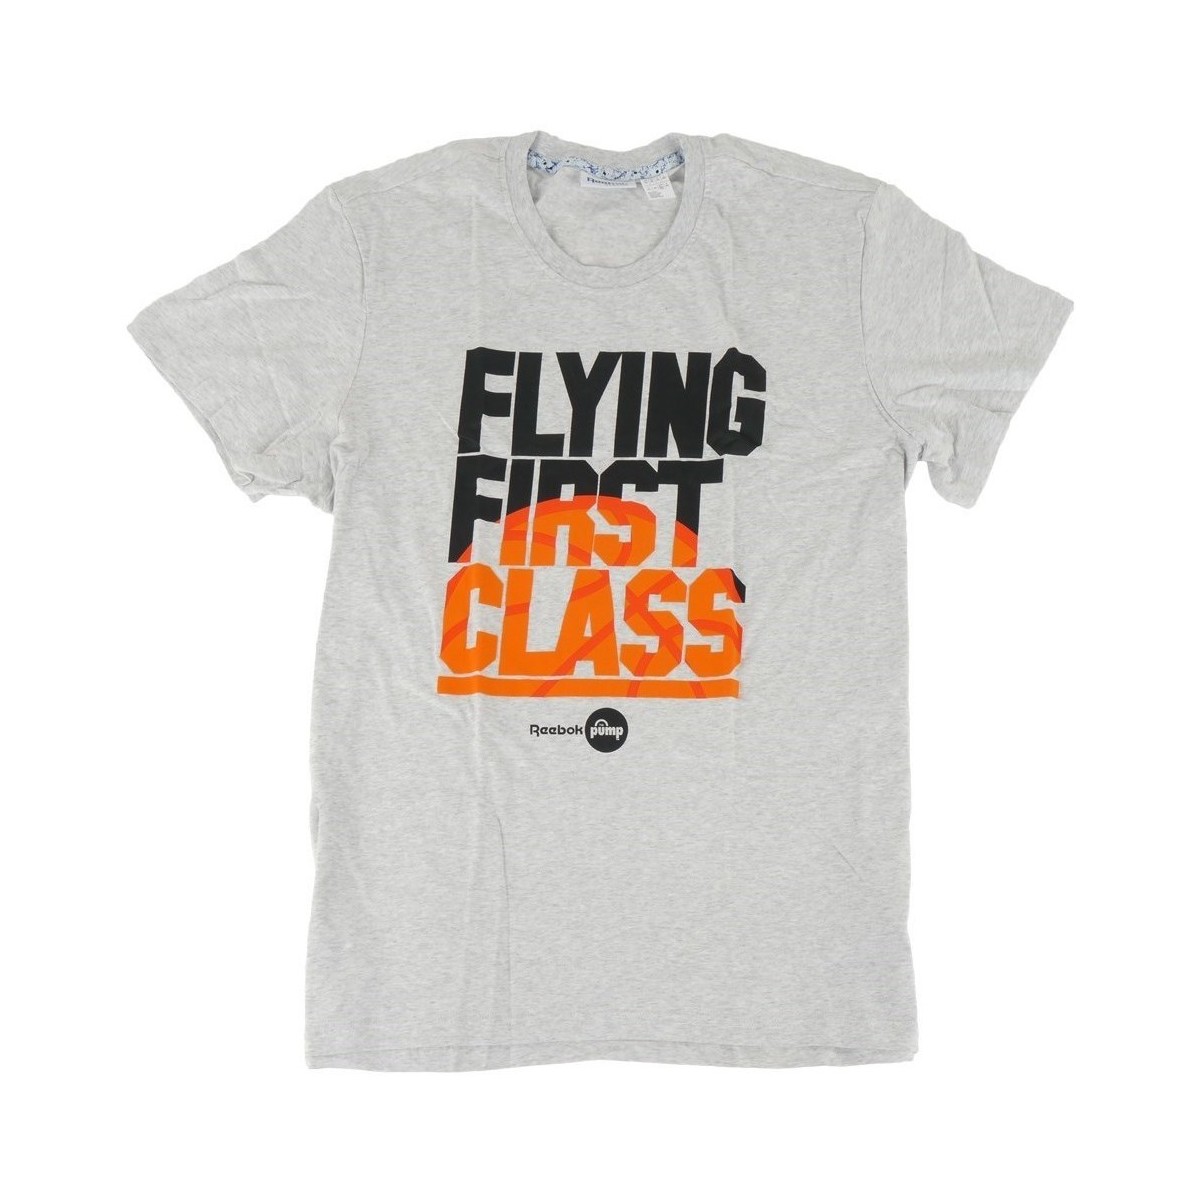 textil Herr T-shirts Reebok Sport Classic Flying 1ST Graphic Grå